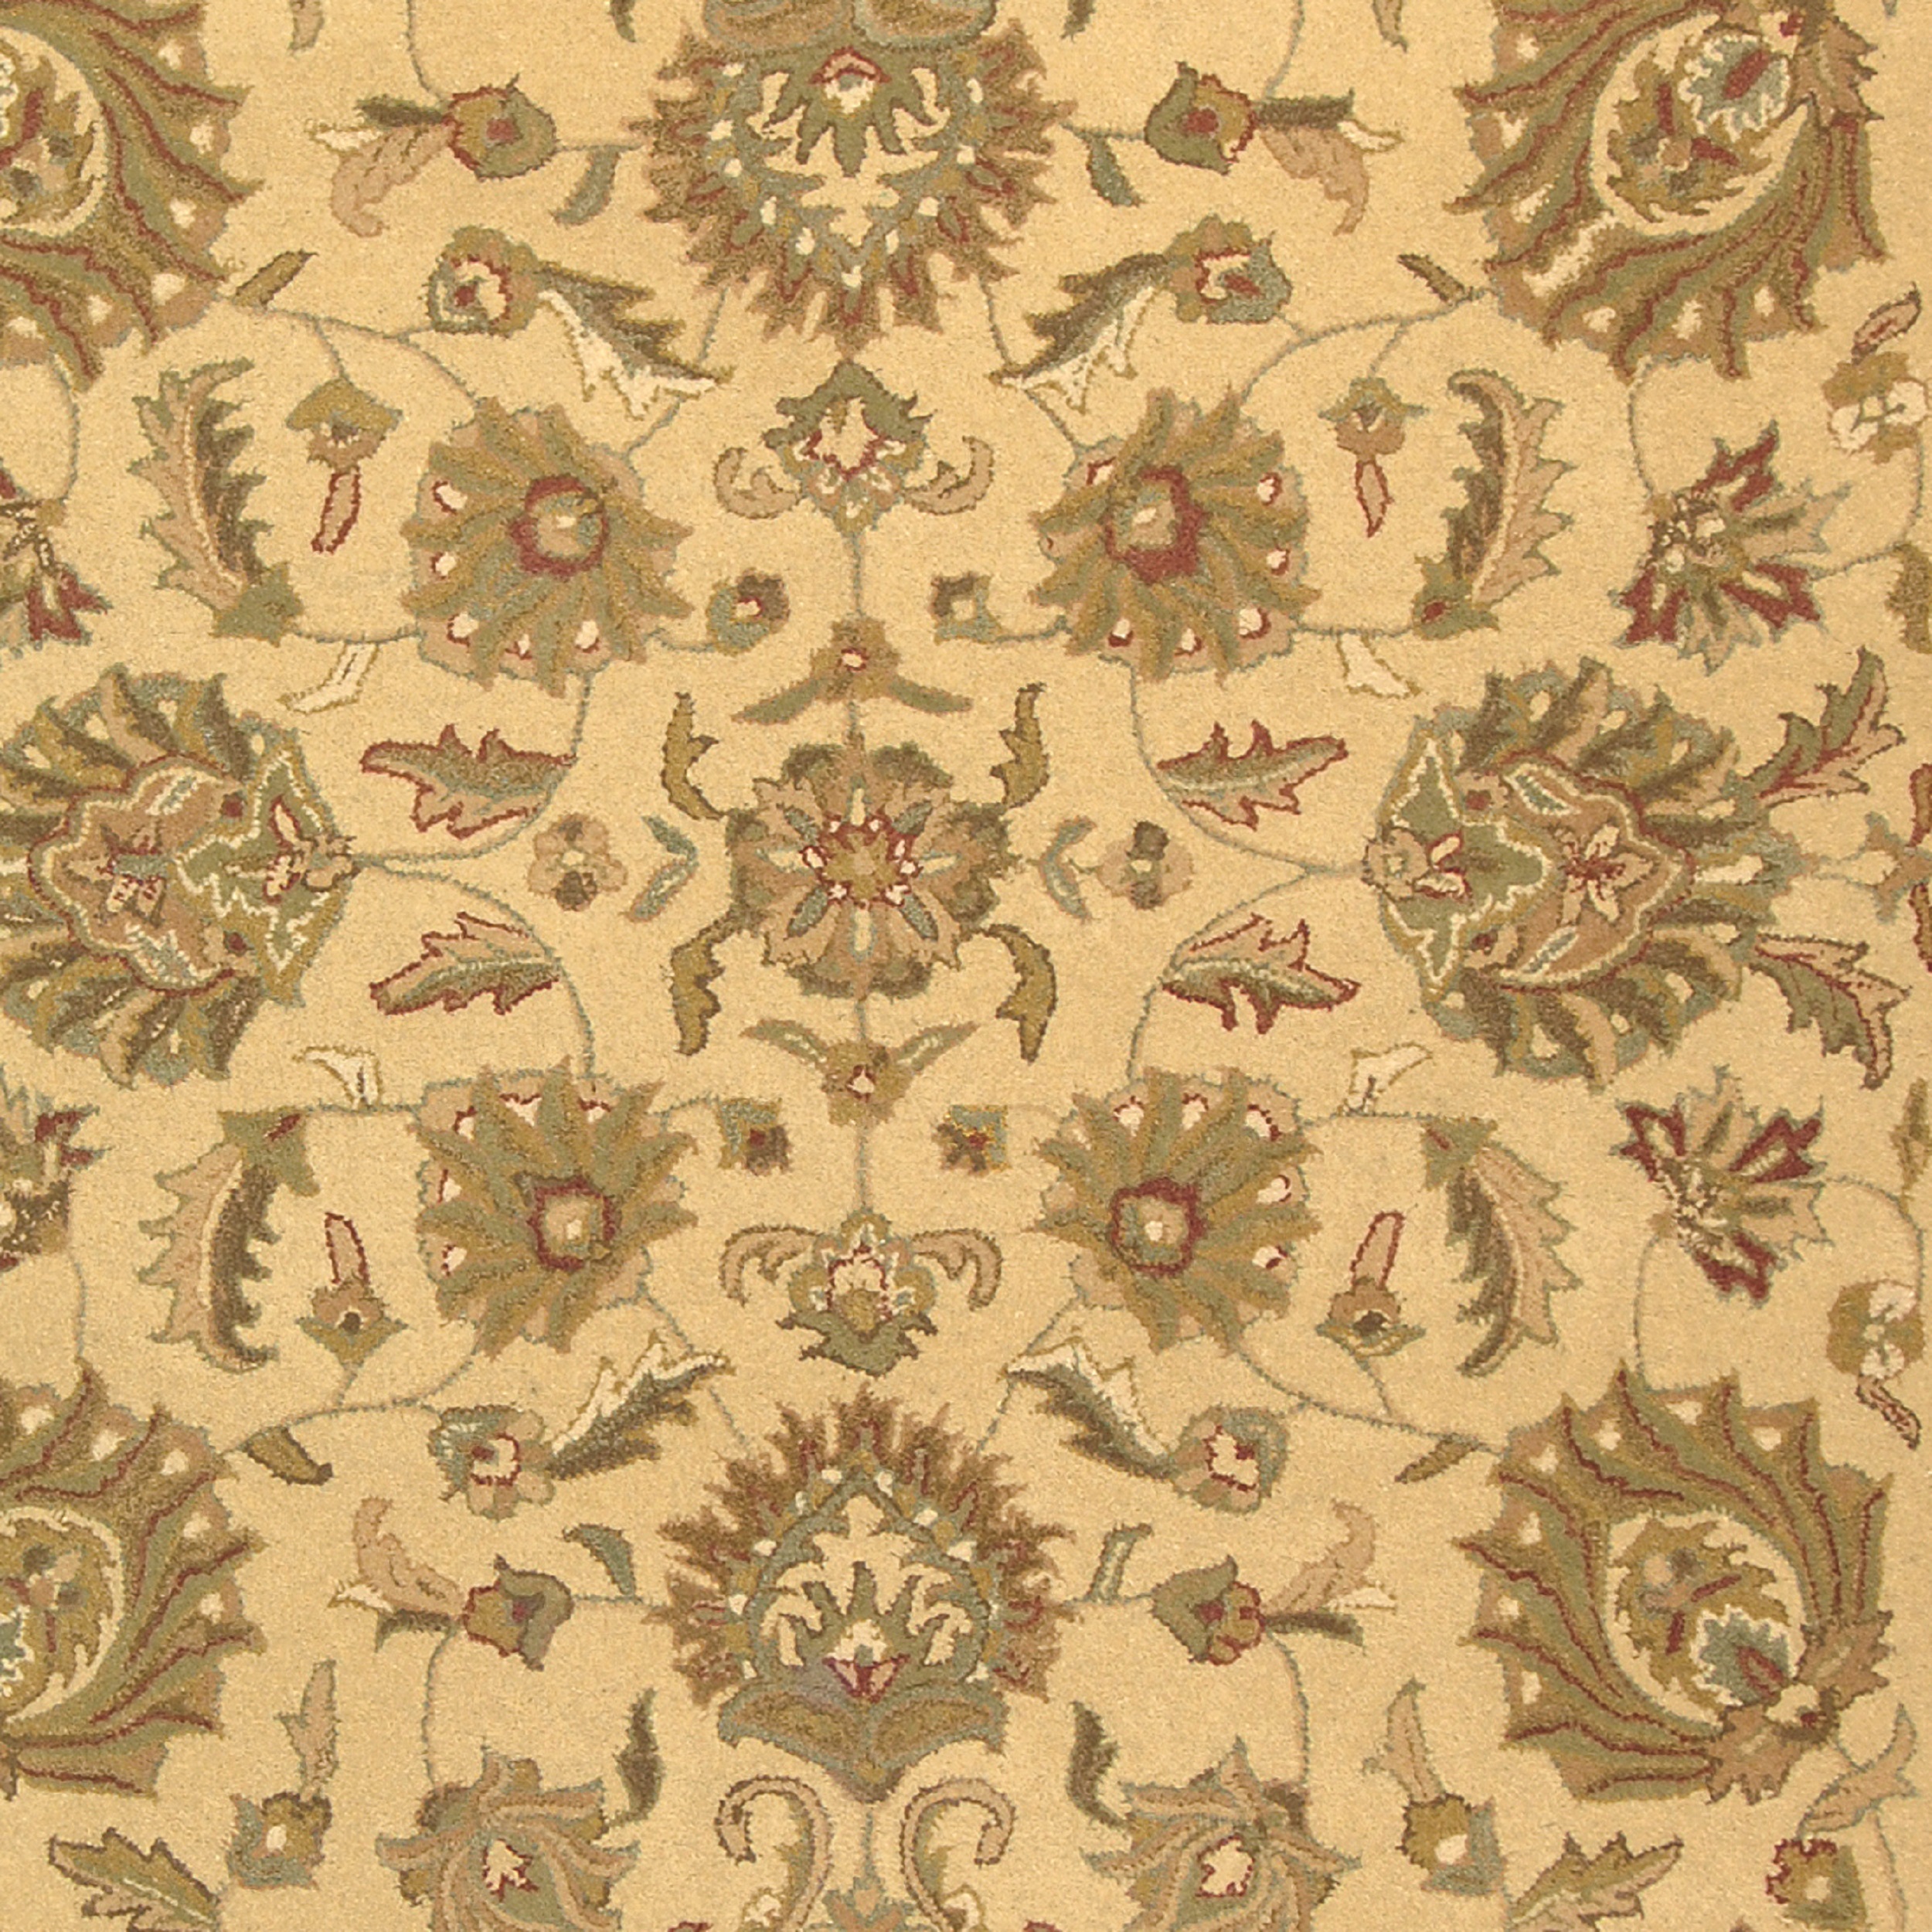 SAFAVIEH Heritage Regis Traditional Wool Area Rug, Ivory/Brown, 8'3" x 11' - image 3 of 4